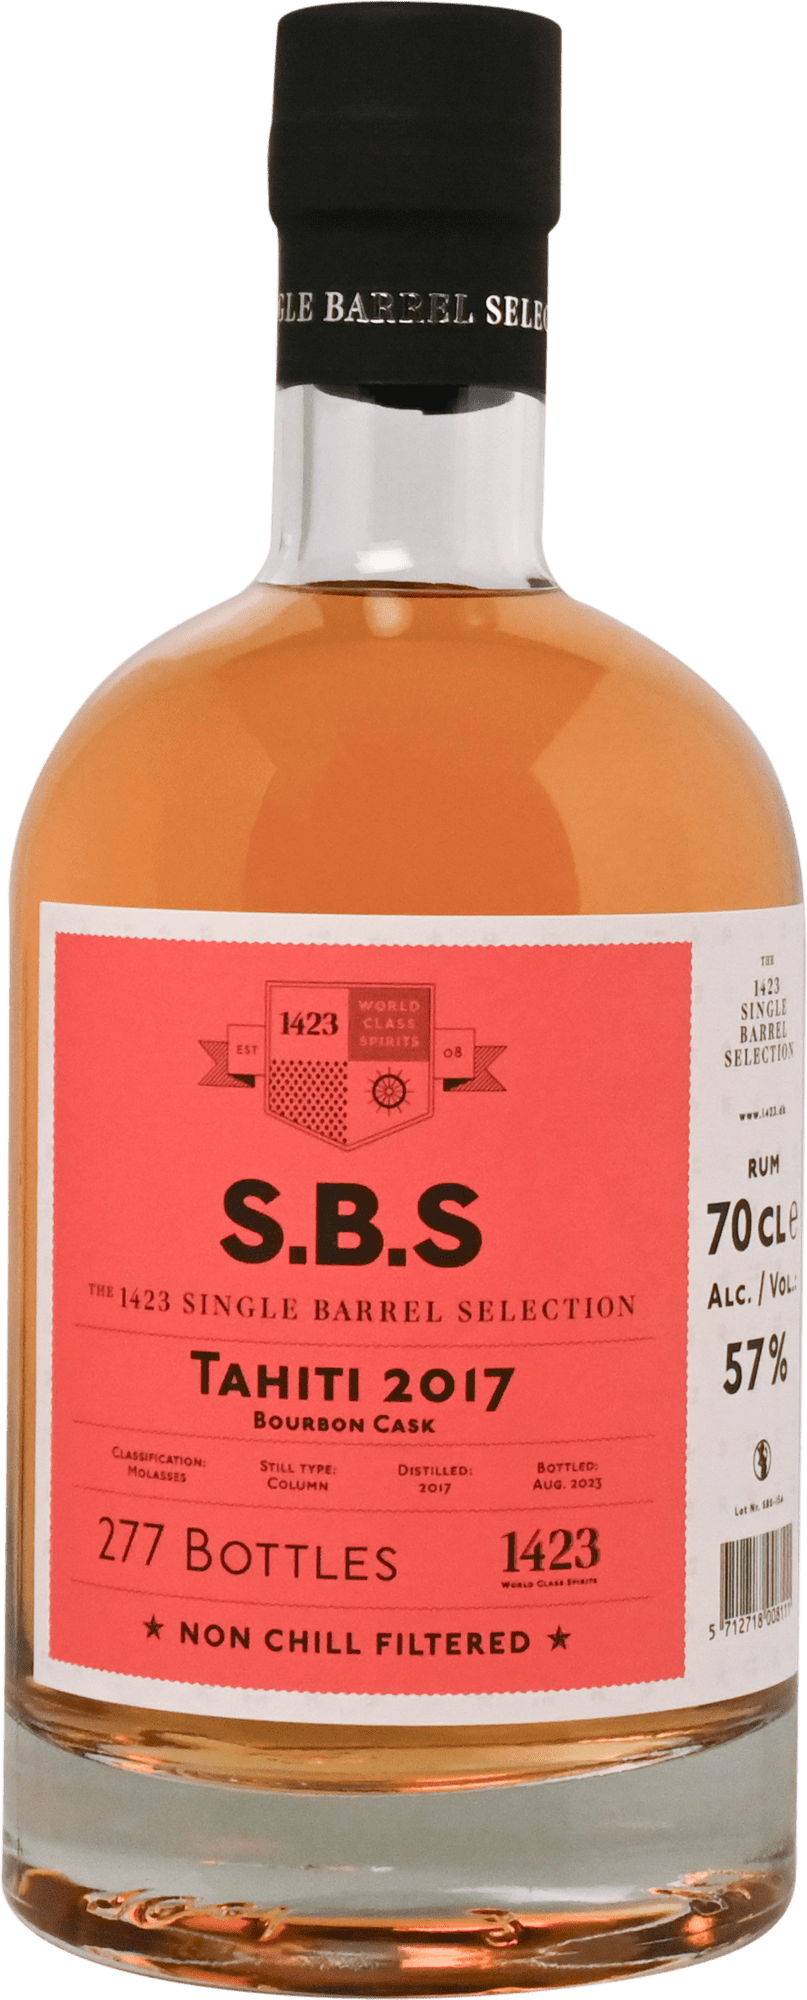 S.B.S Tahiti 2017 Bourbon Cask, GIFT